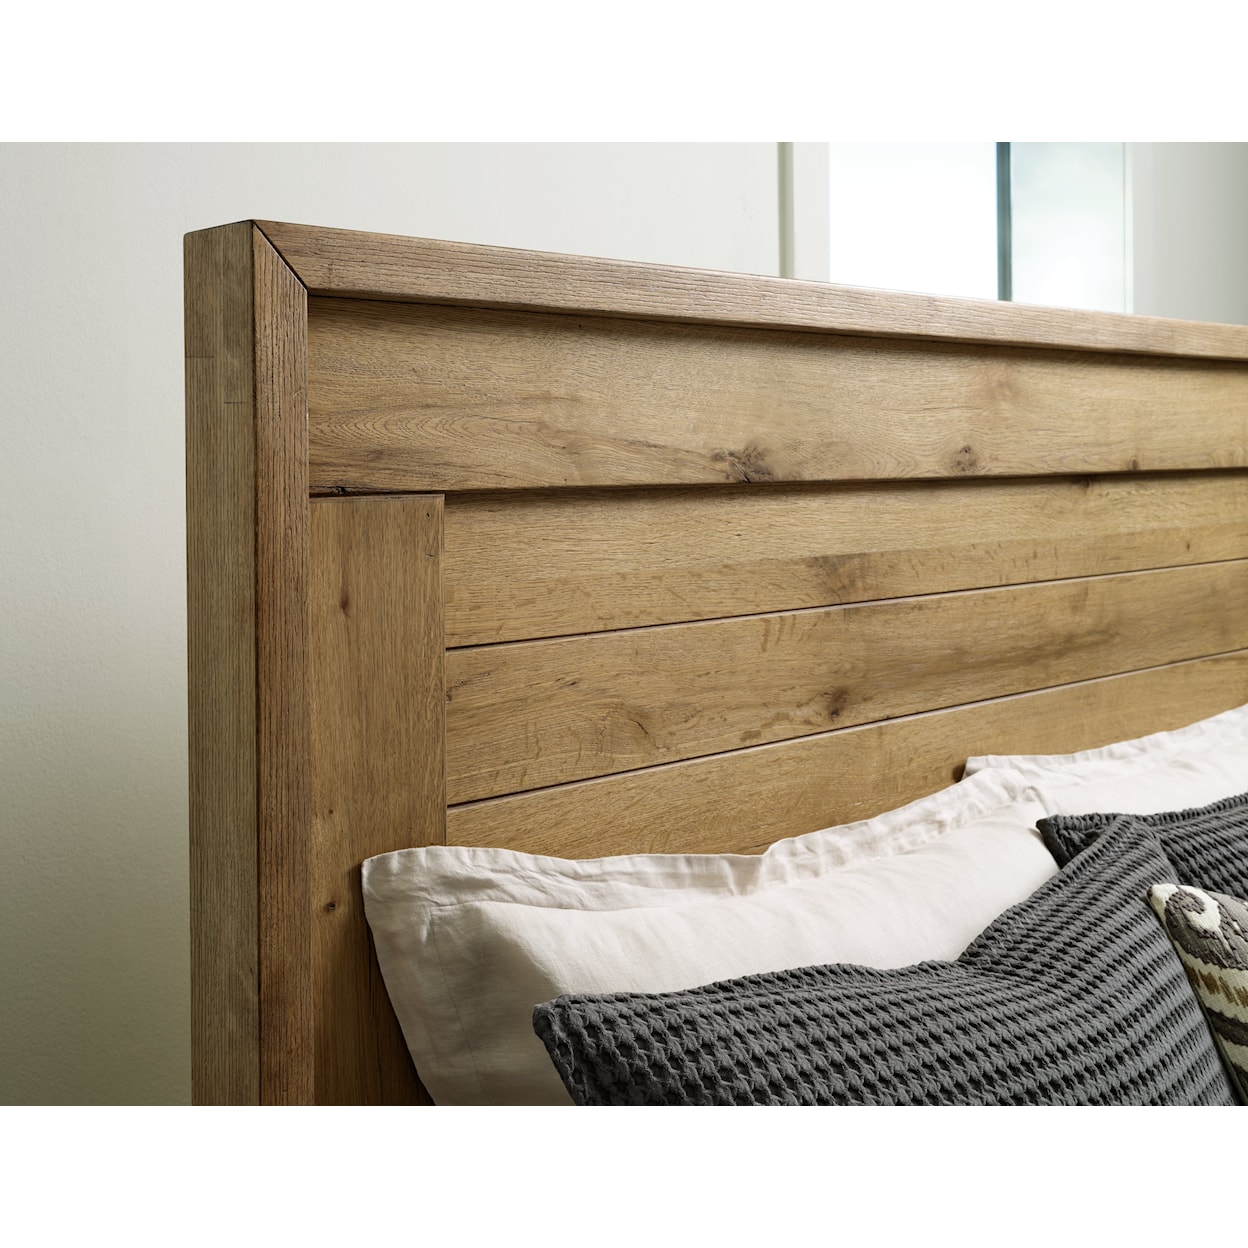 Ashley Furniture Signature Design Galliden King Panel Bed